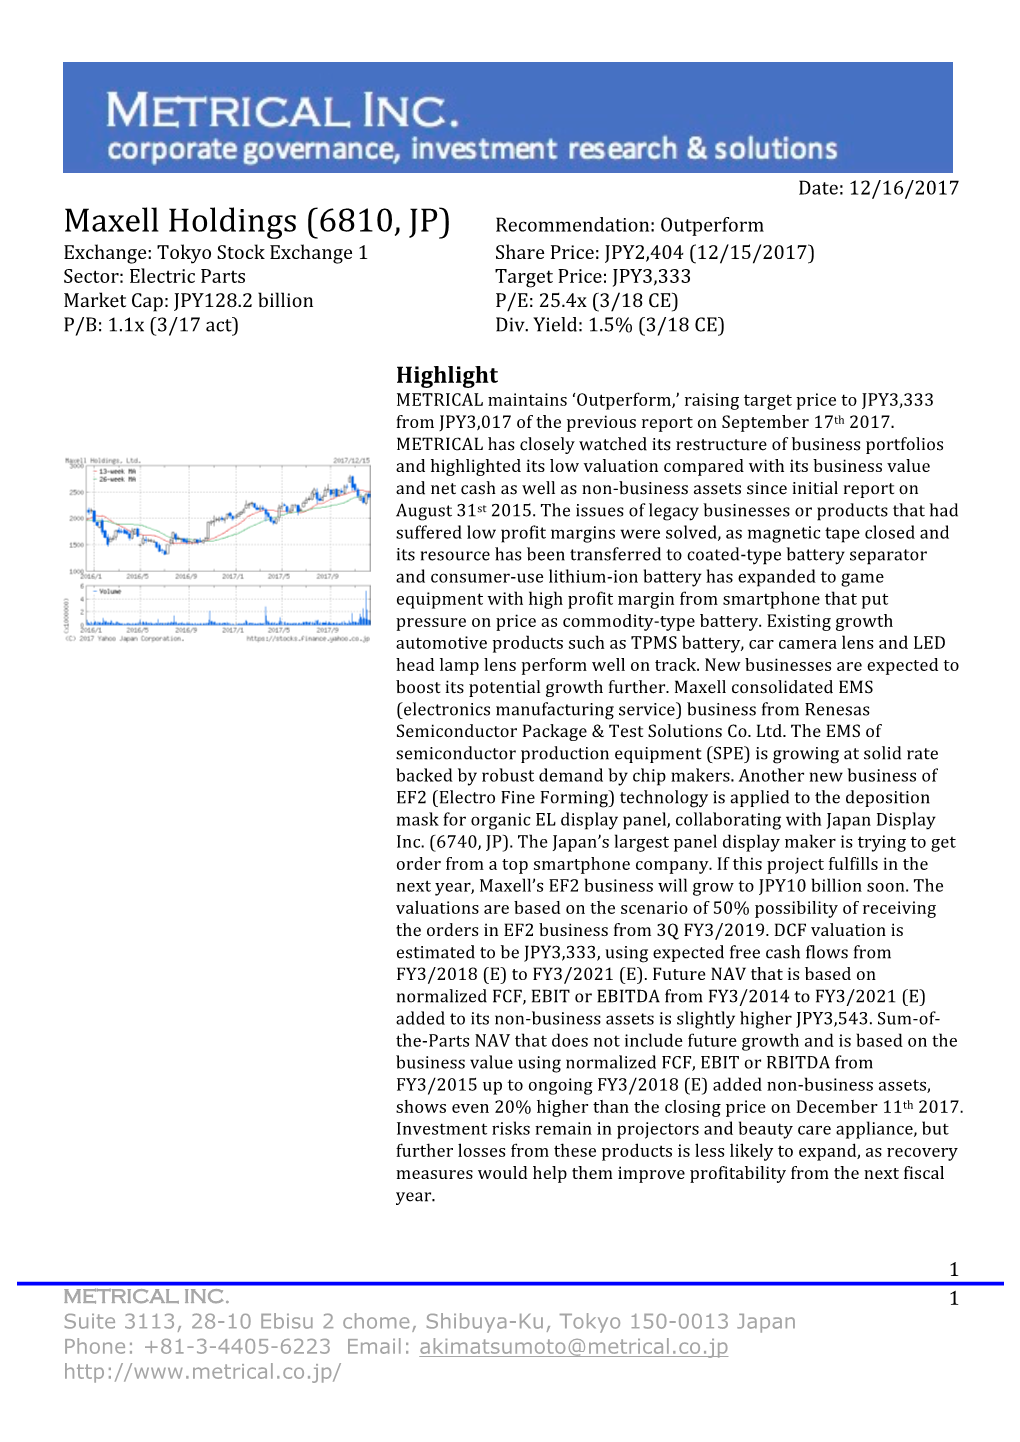 Maxell Holdings (6810, JP) 12/15/2017